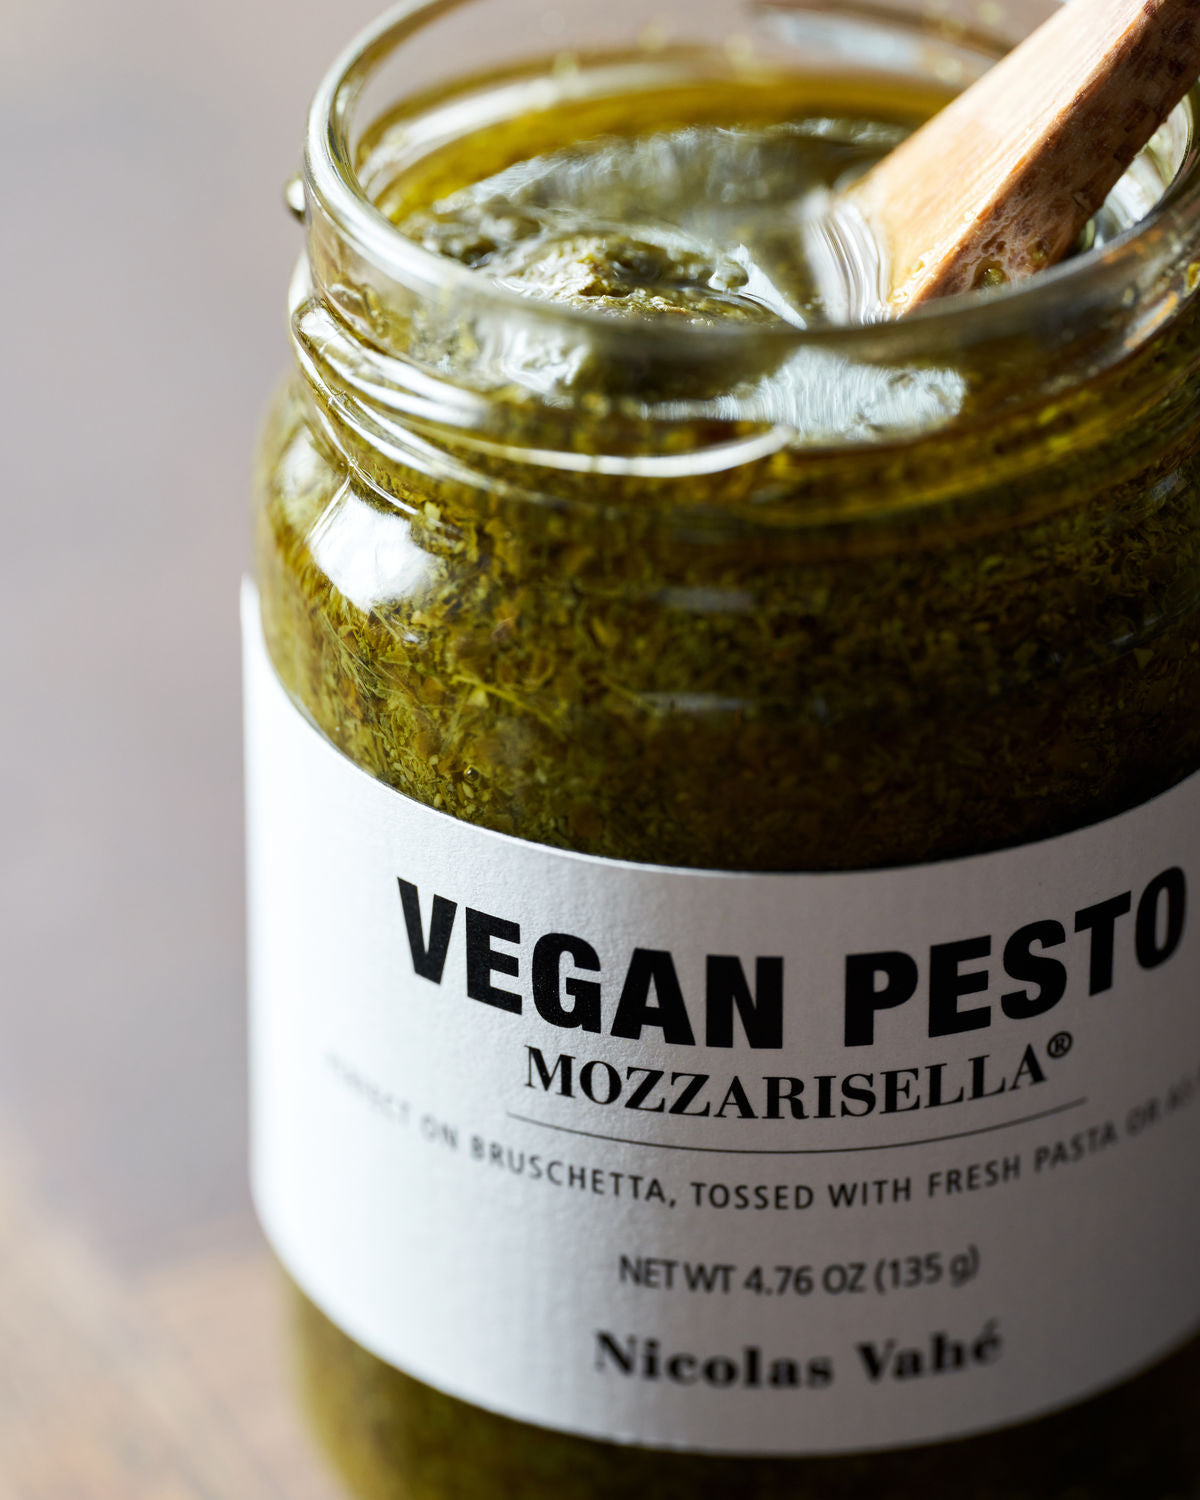 Vegan pesto with mozzarisella